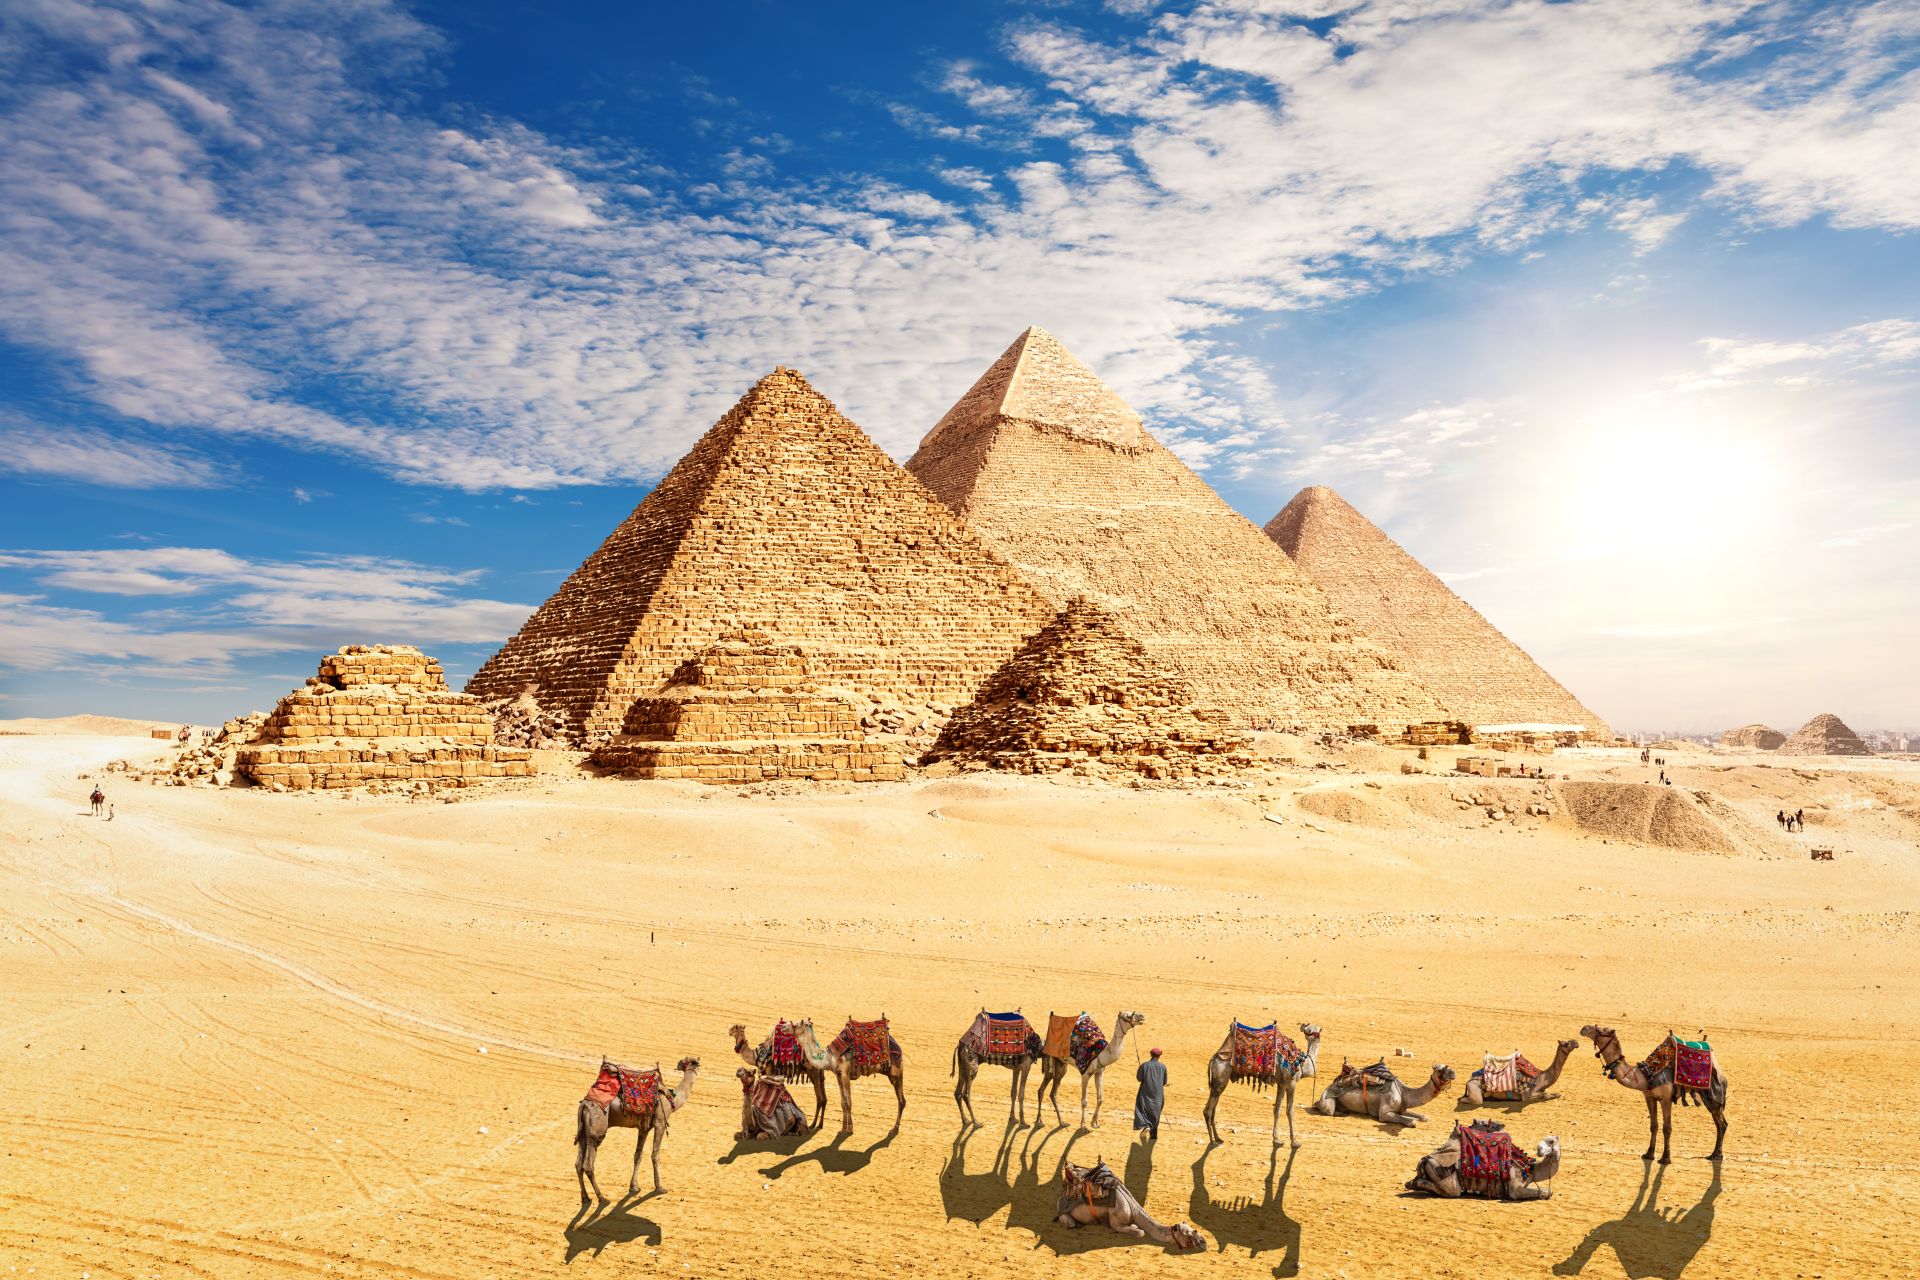 EGYPT Pyramids,Of,Egypt,And,Сamel,Caravan,Resting,In,The,Desert,